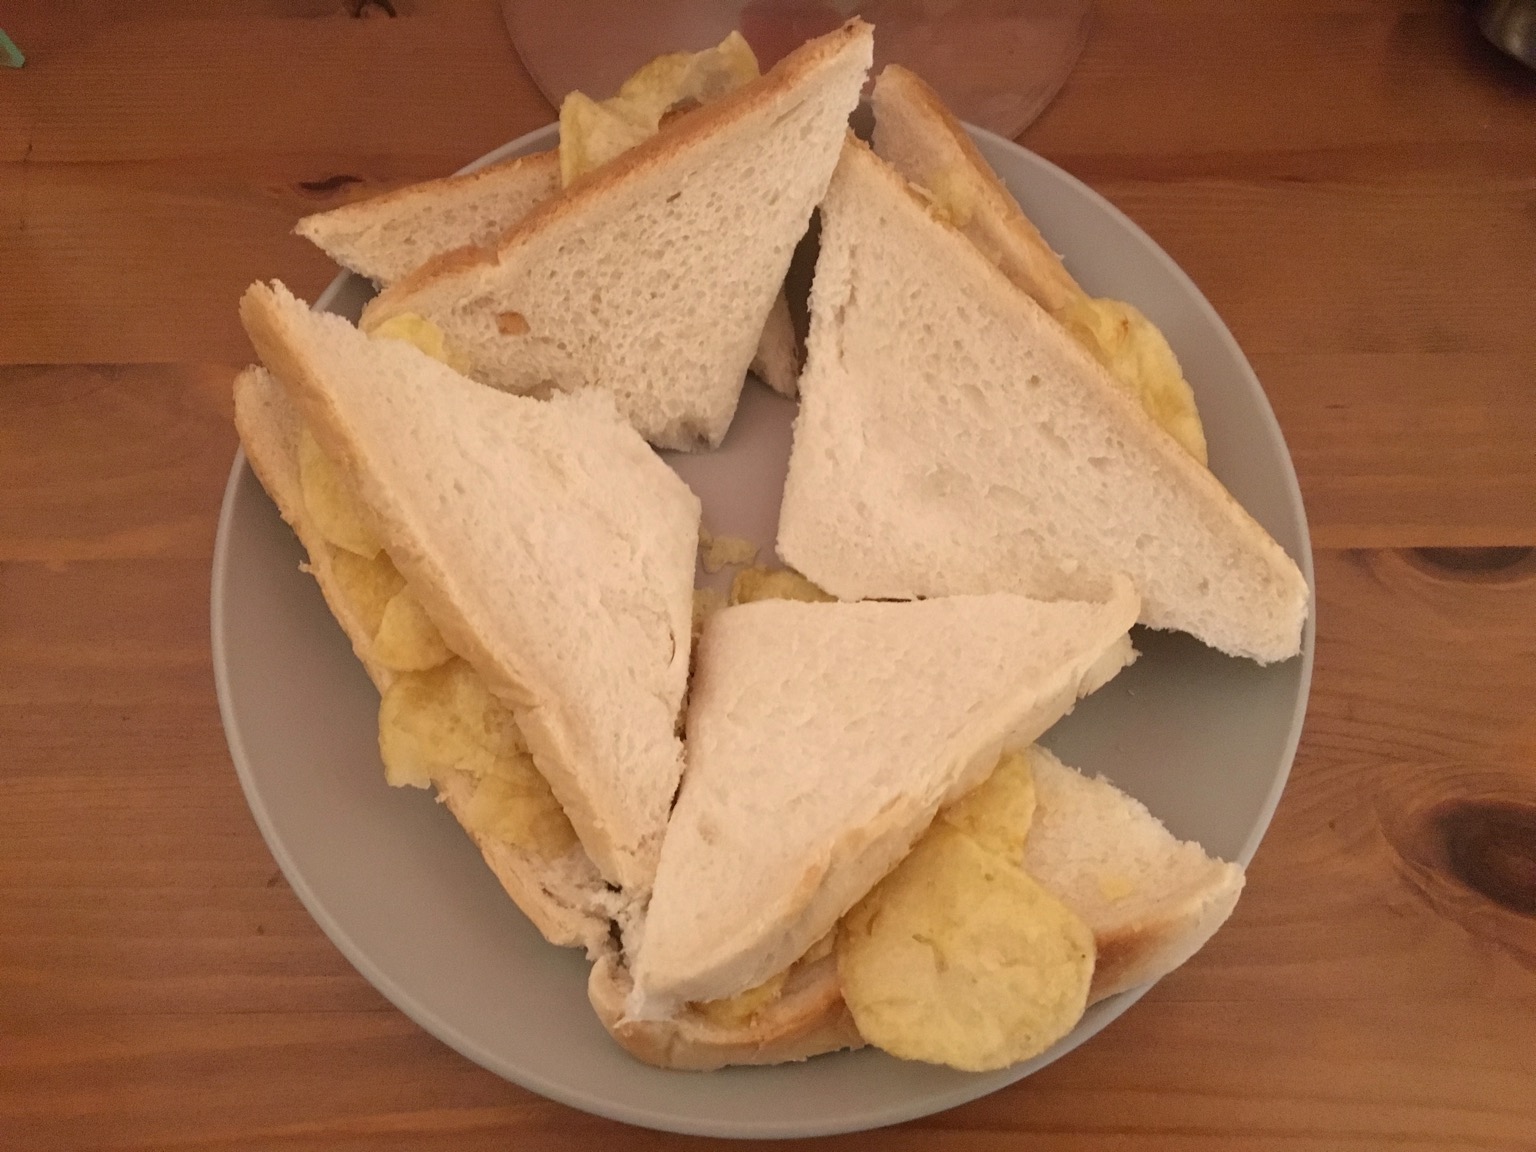 White crisp sandwich cut into quarters diagonally